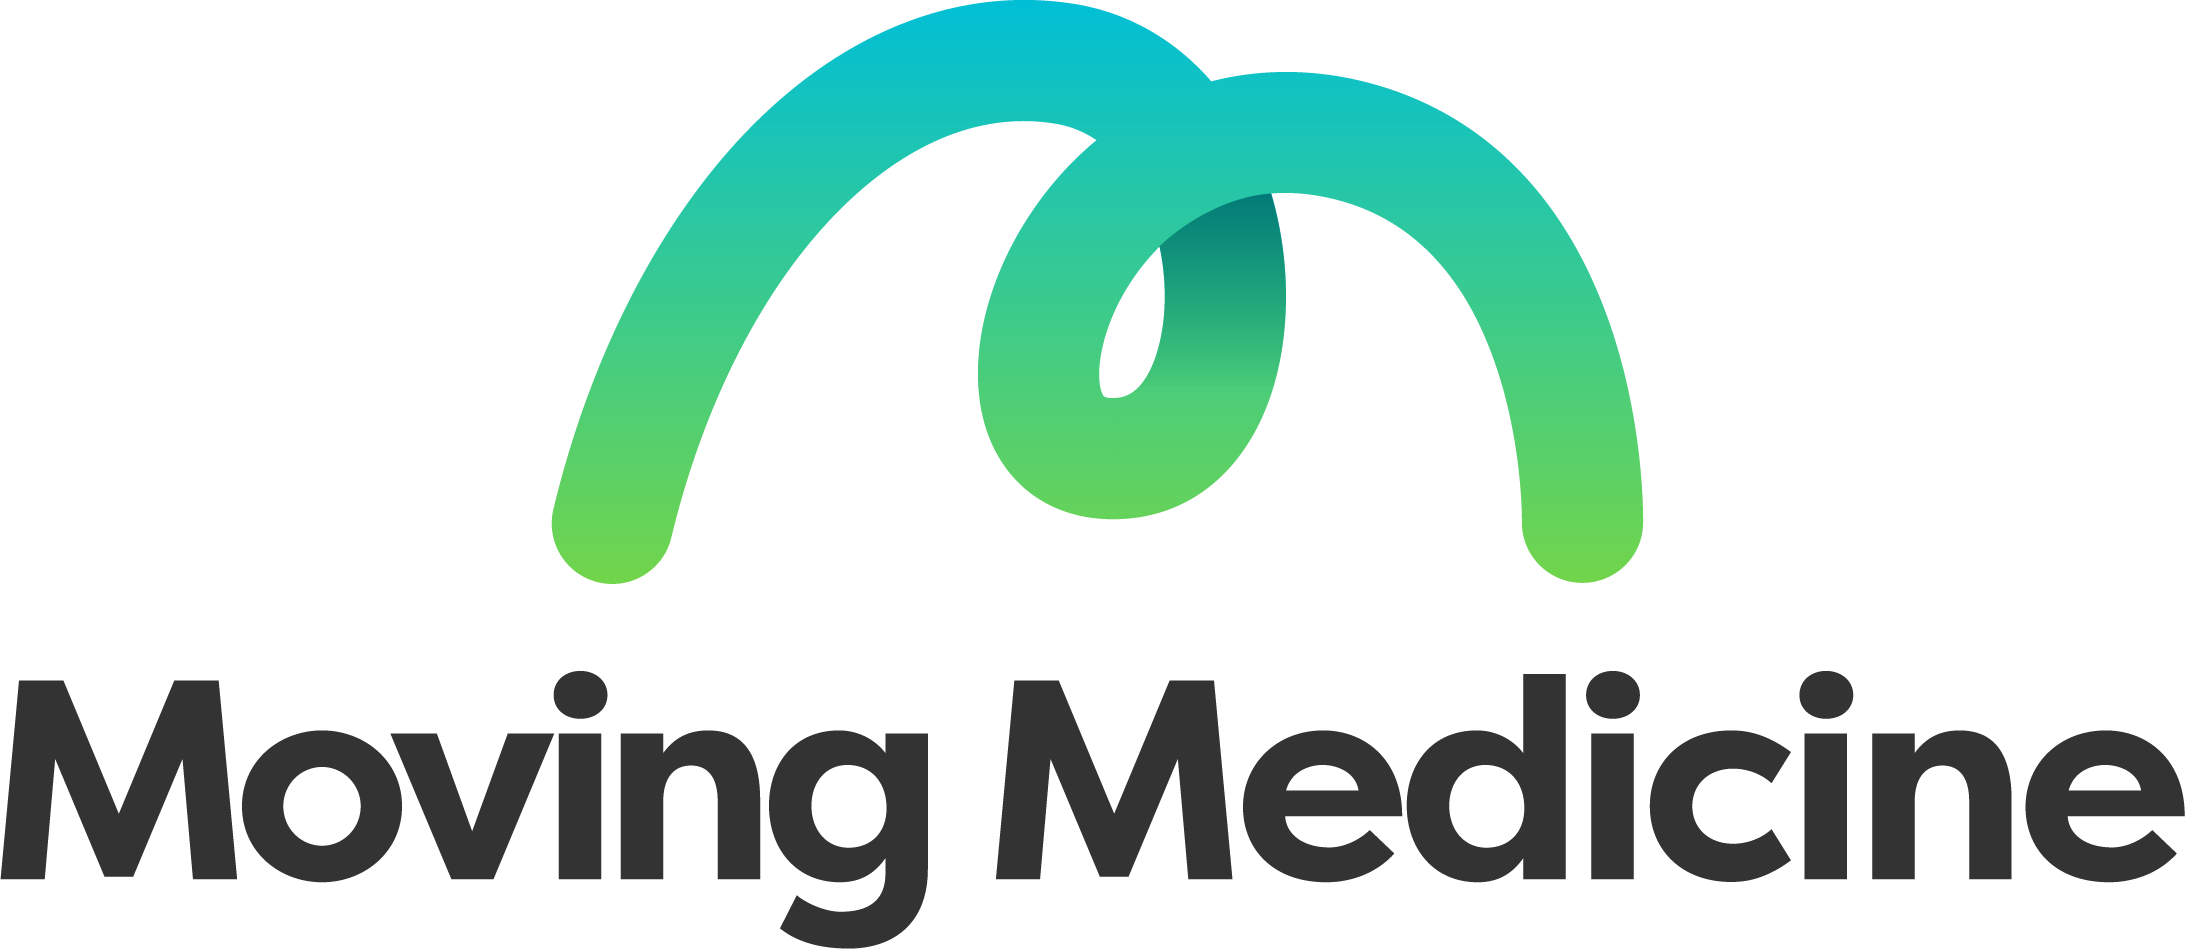 MOVING IS MEDICINE logo